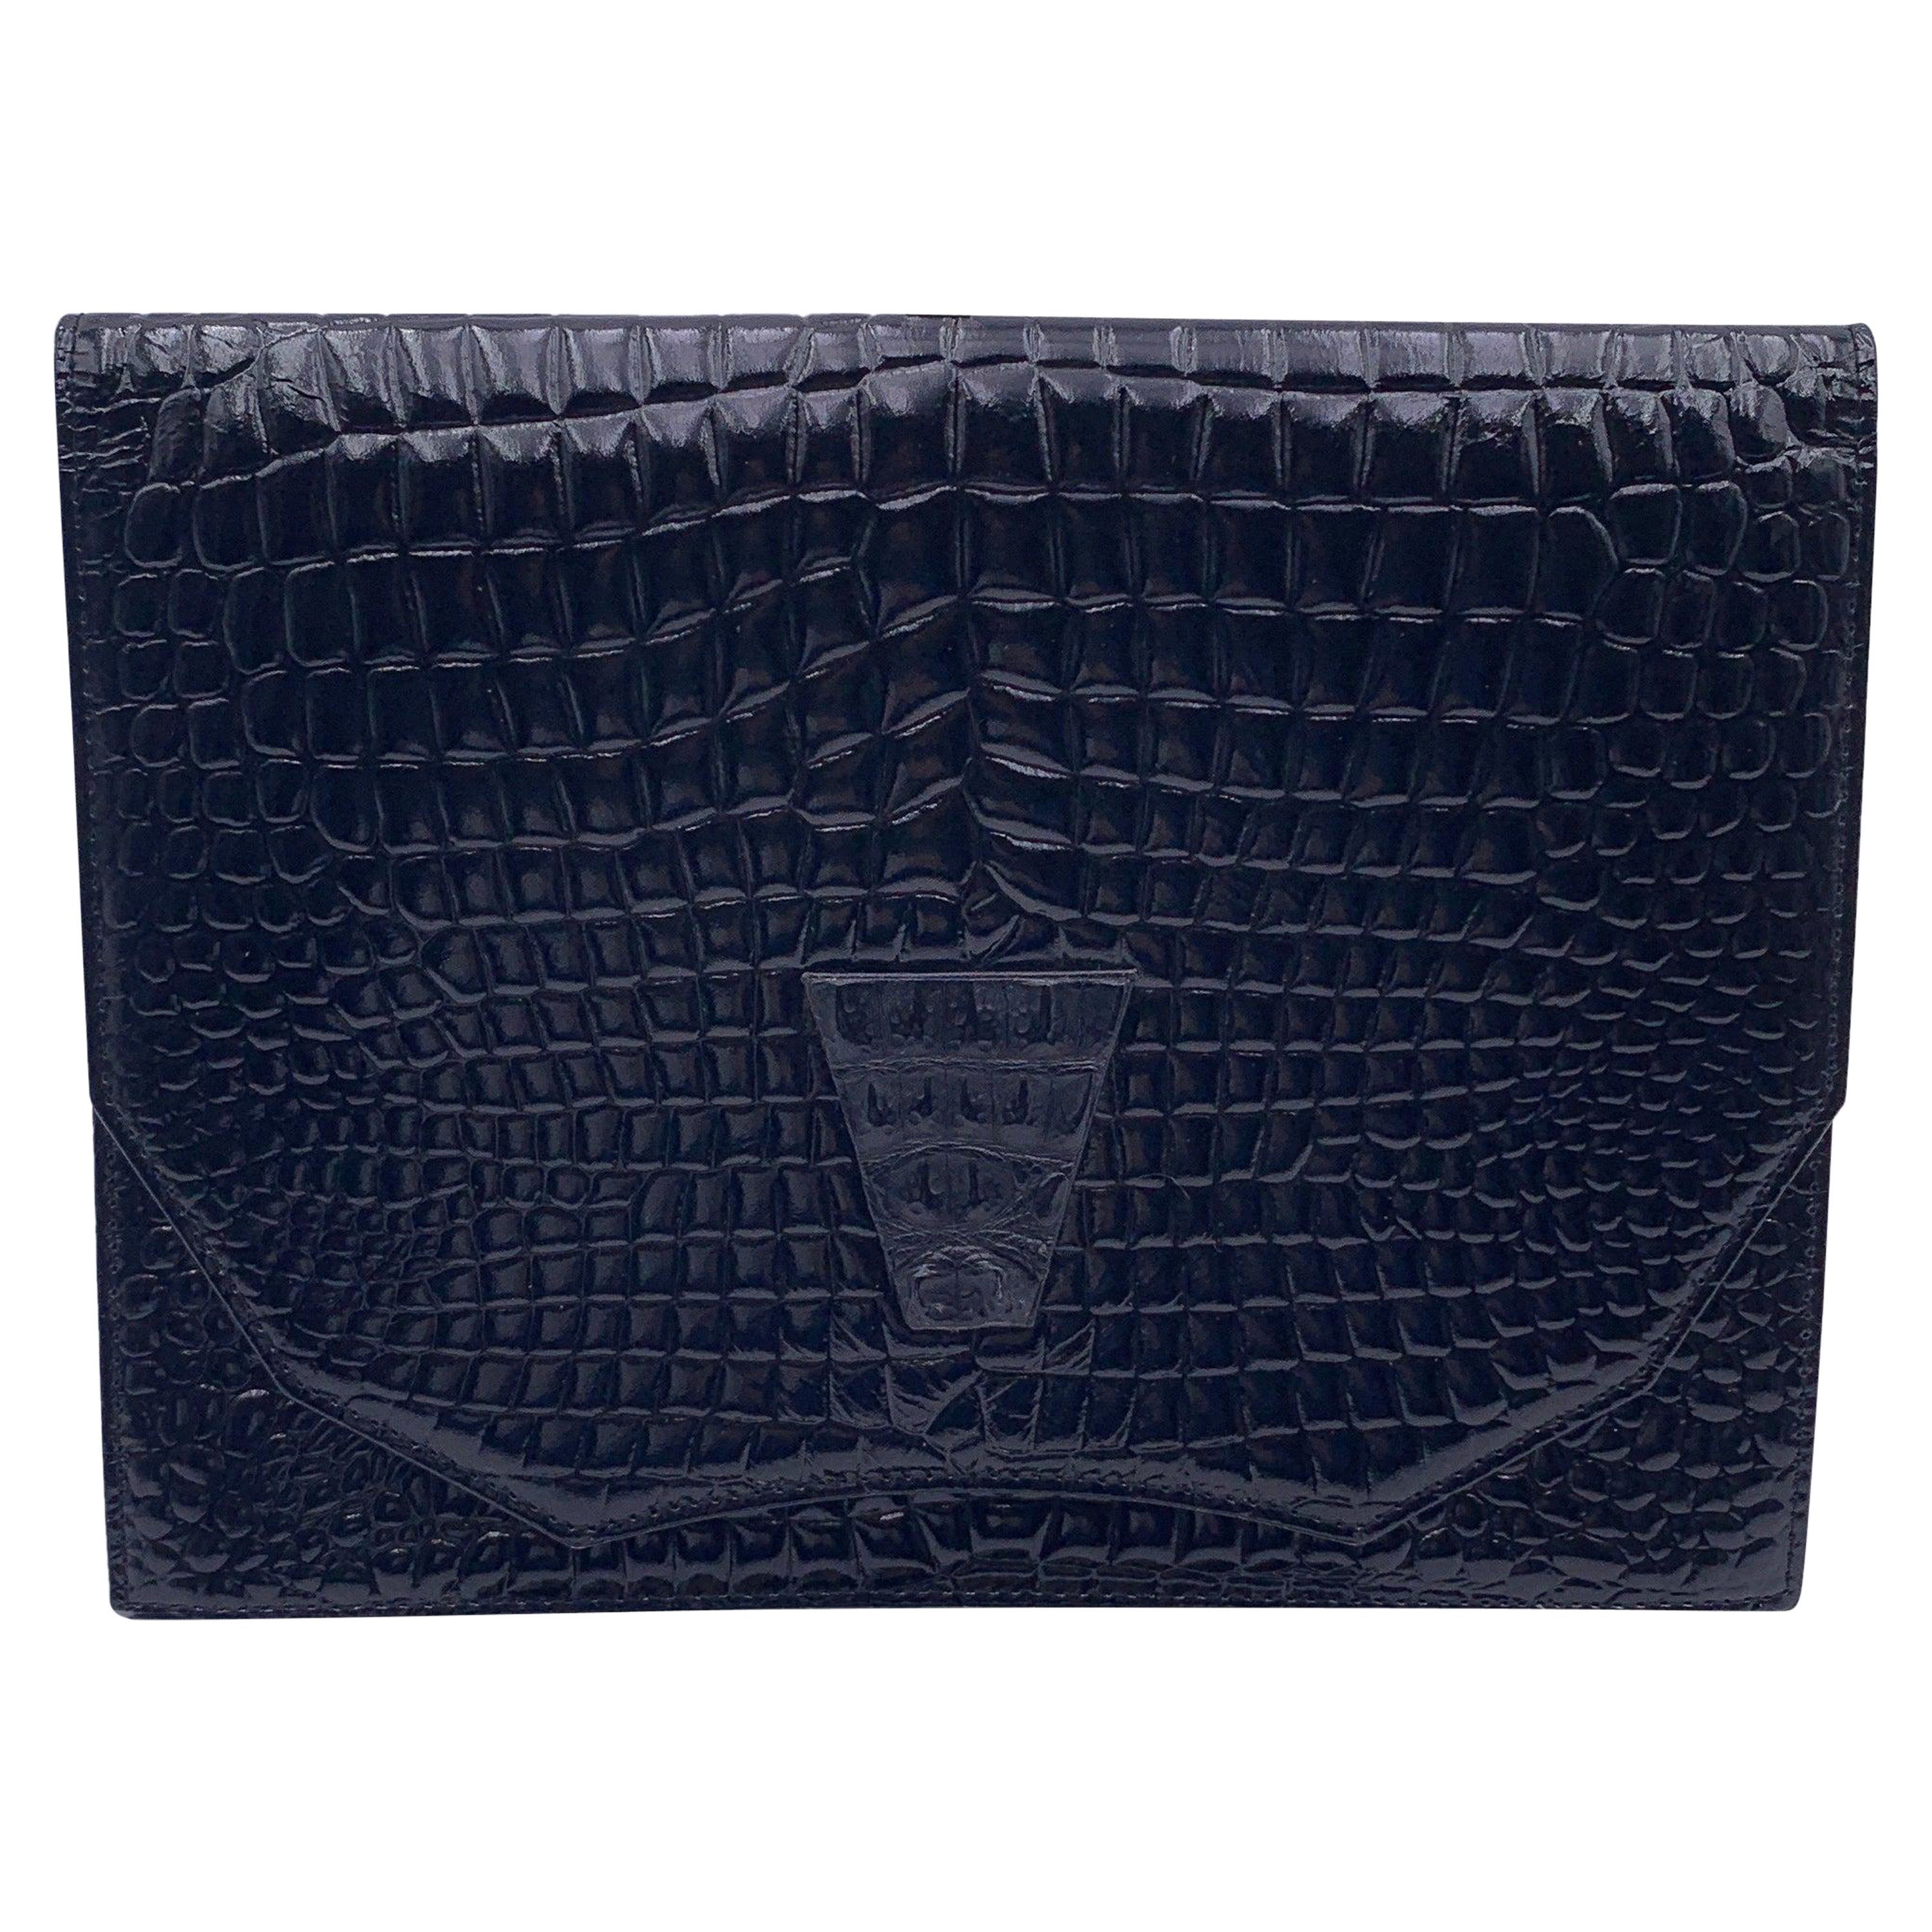 Yves Saint Laurent Vintage Black Leather Embossed Flap Clutch Purse For Sale